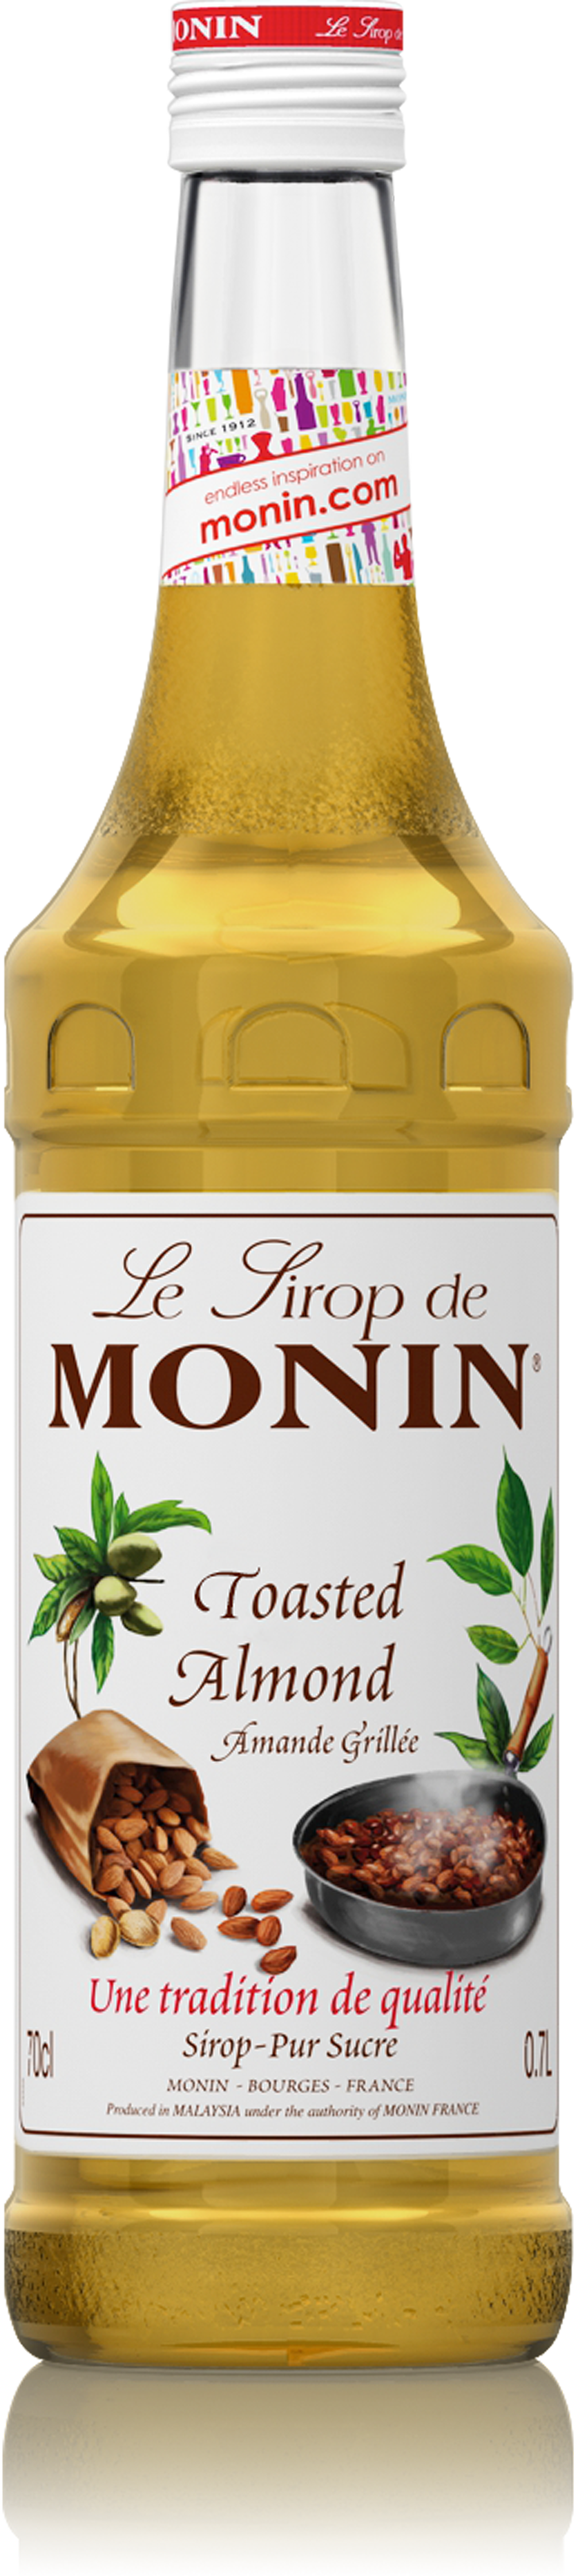 Le Sirop de MONIN Toasted Almond